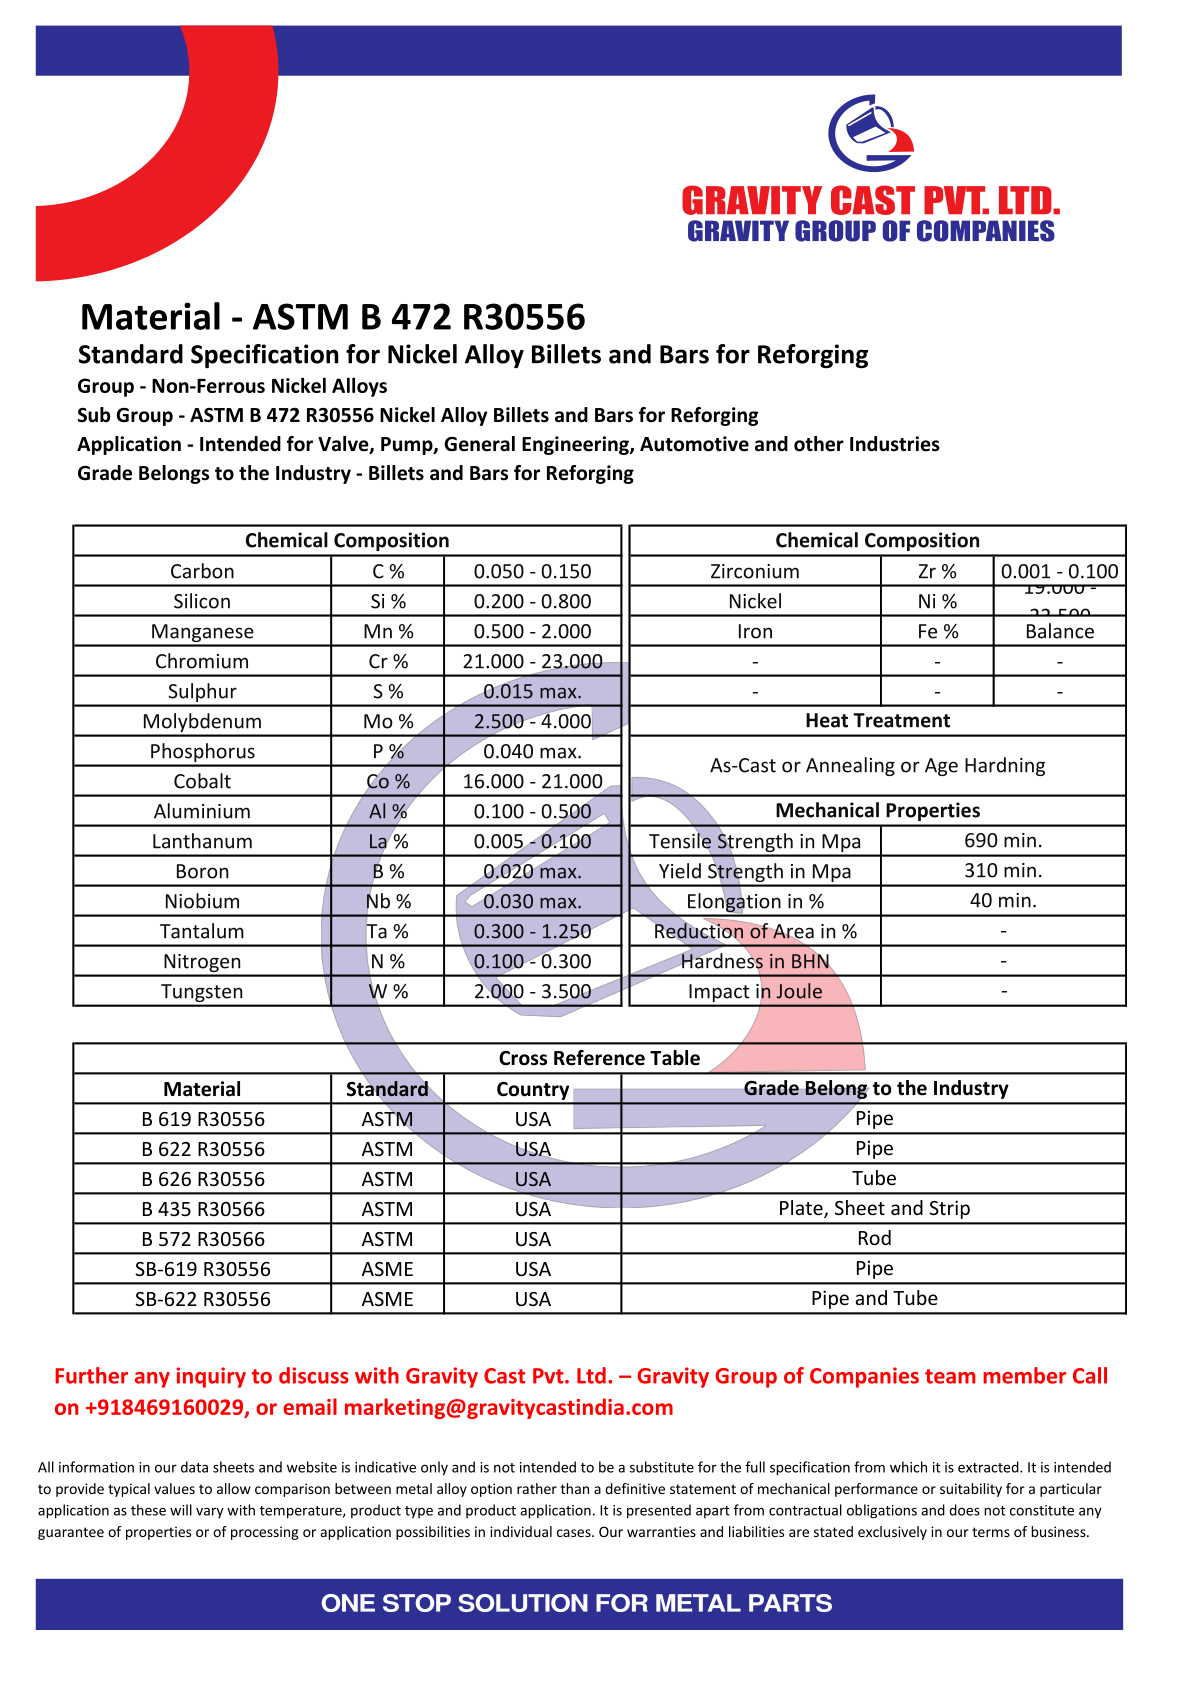 ASTM B 472 R30556.pdf